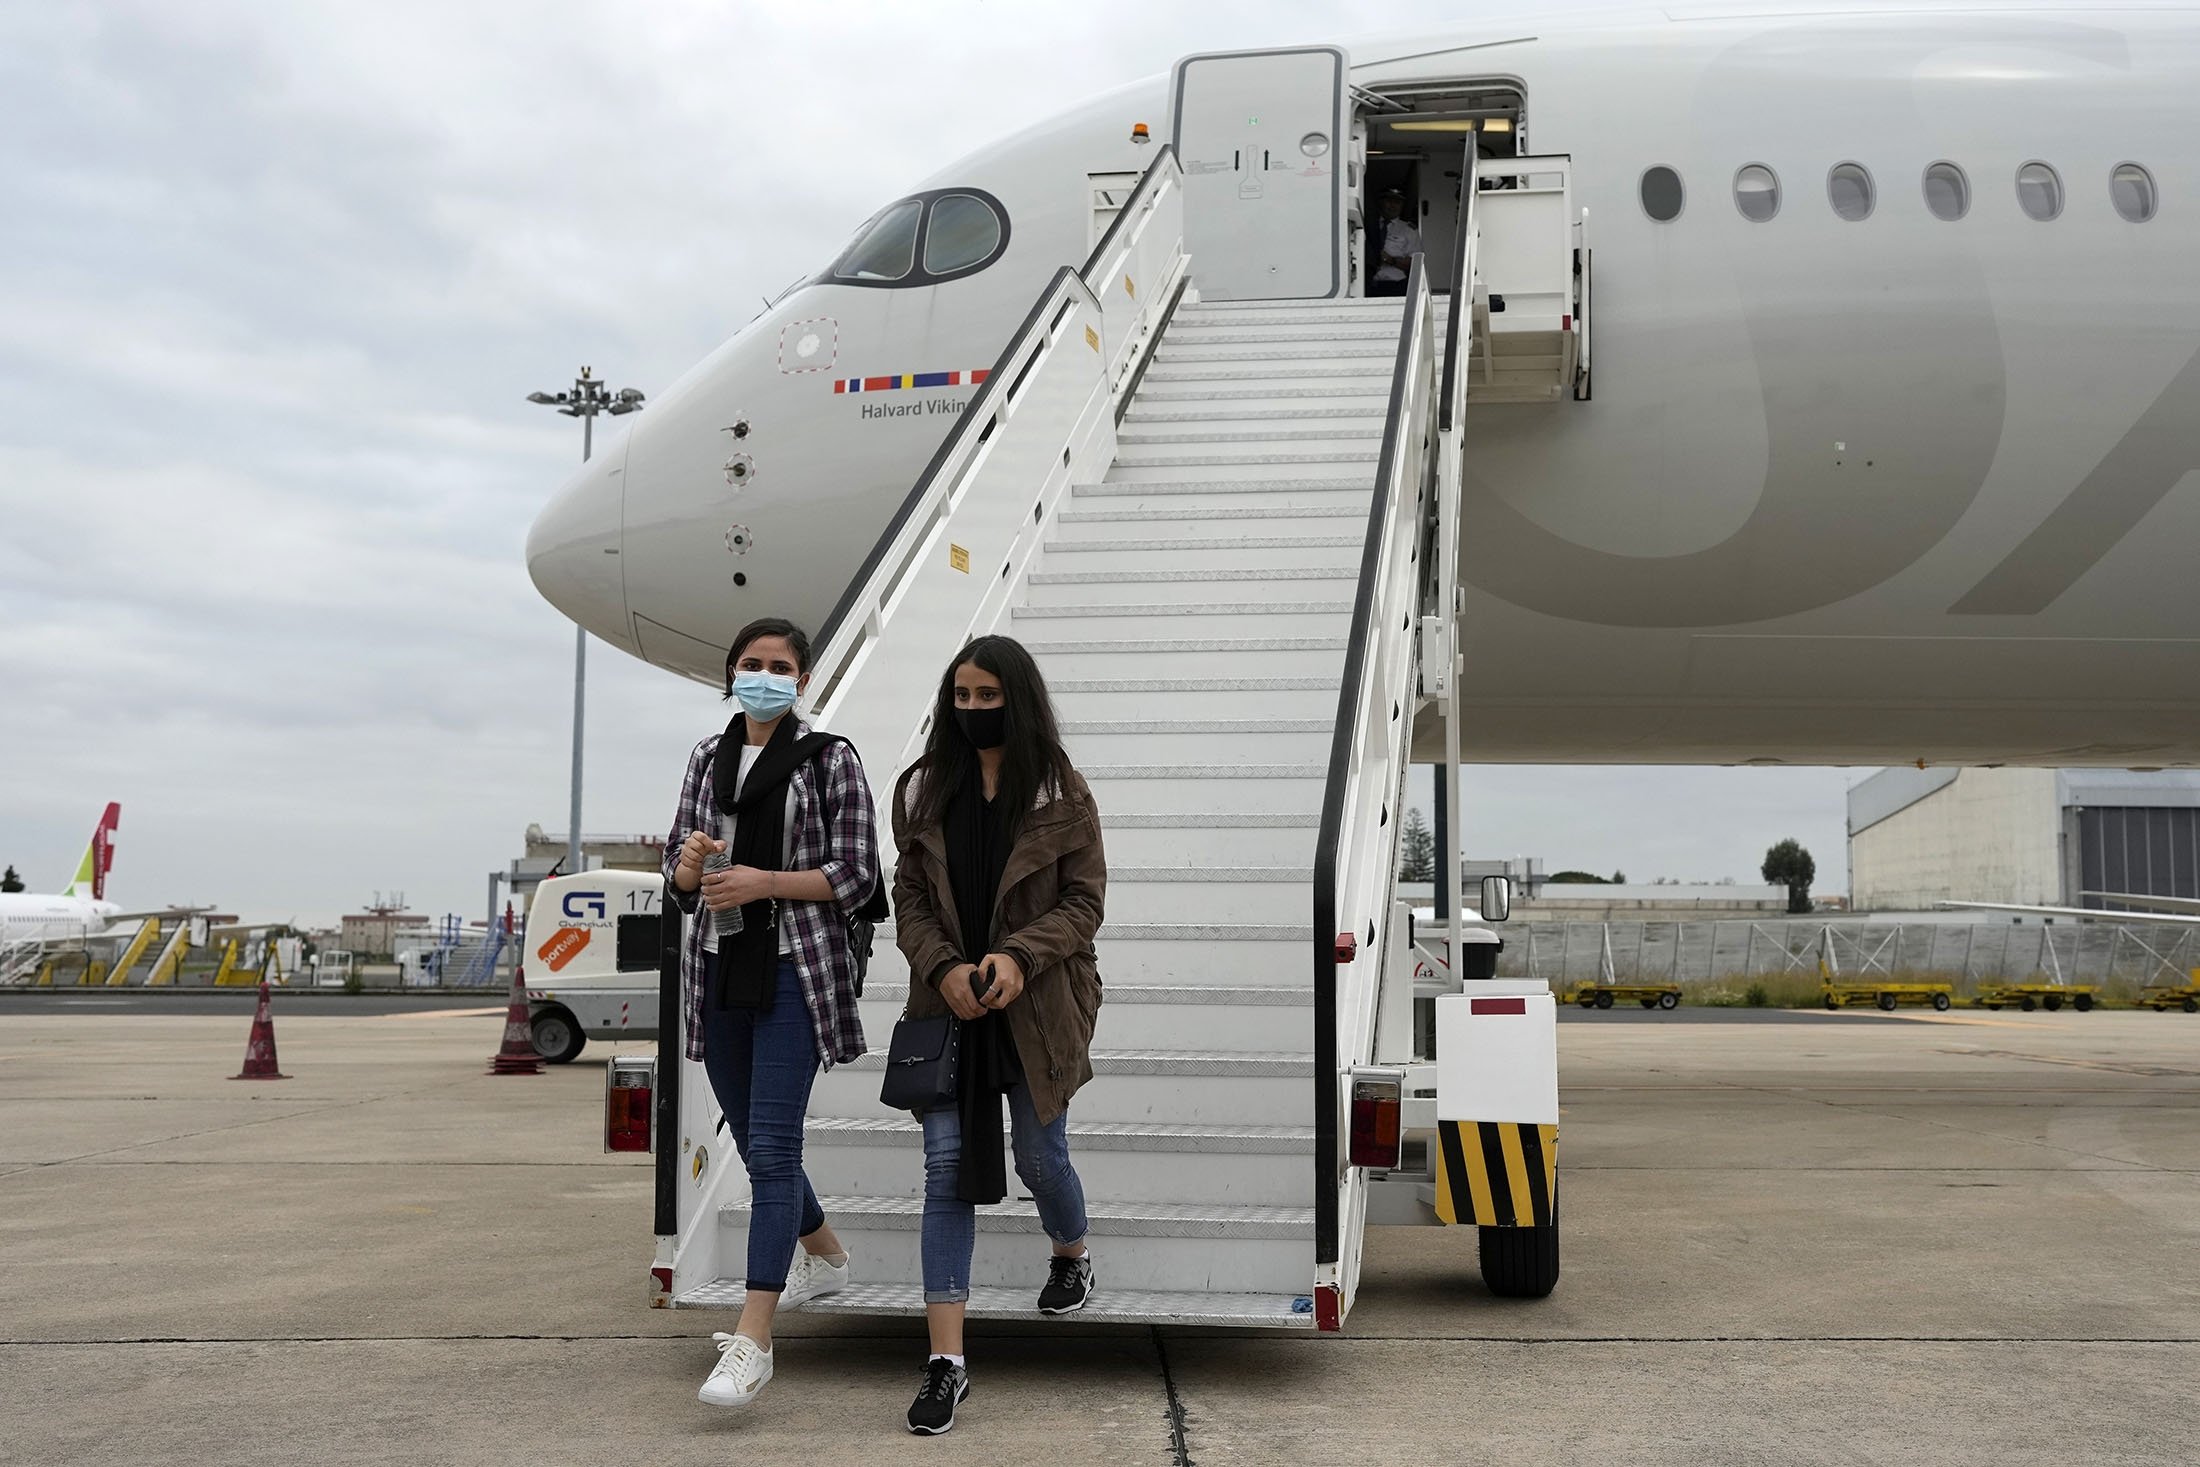 Afghan musicians Shogofa Safi (L) and Marzia Anwari disembark from an airplane at a military airport, in Lisbon, Portugal, Dec. 13, 2021. (AP Photo)